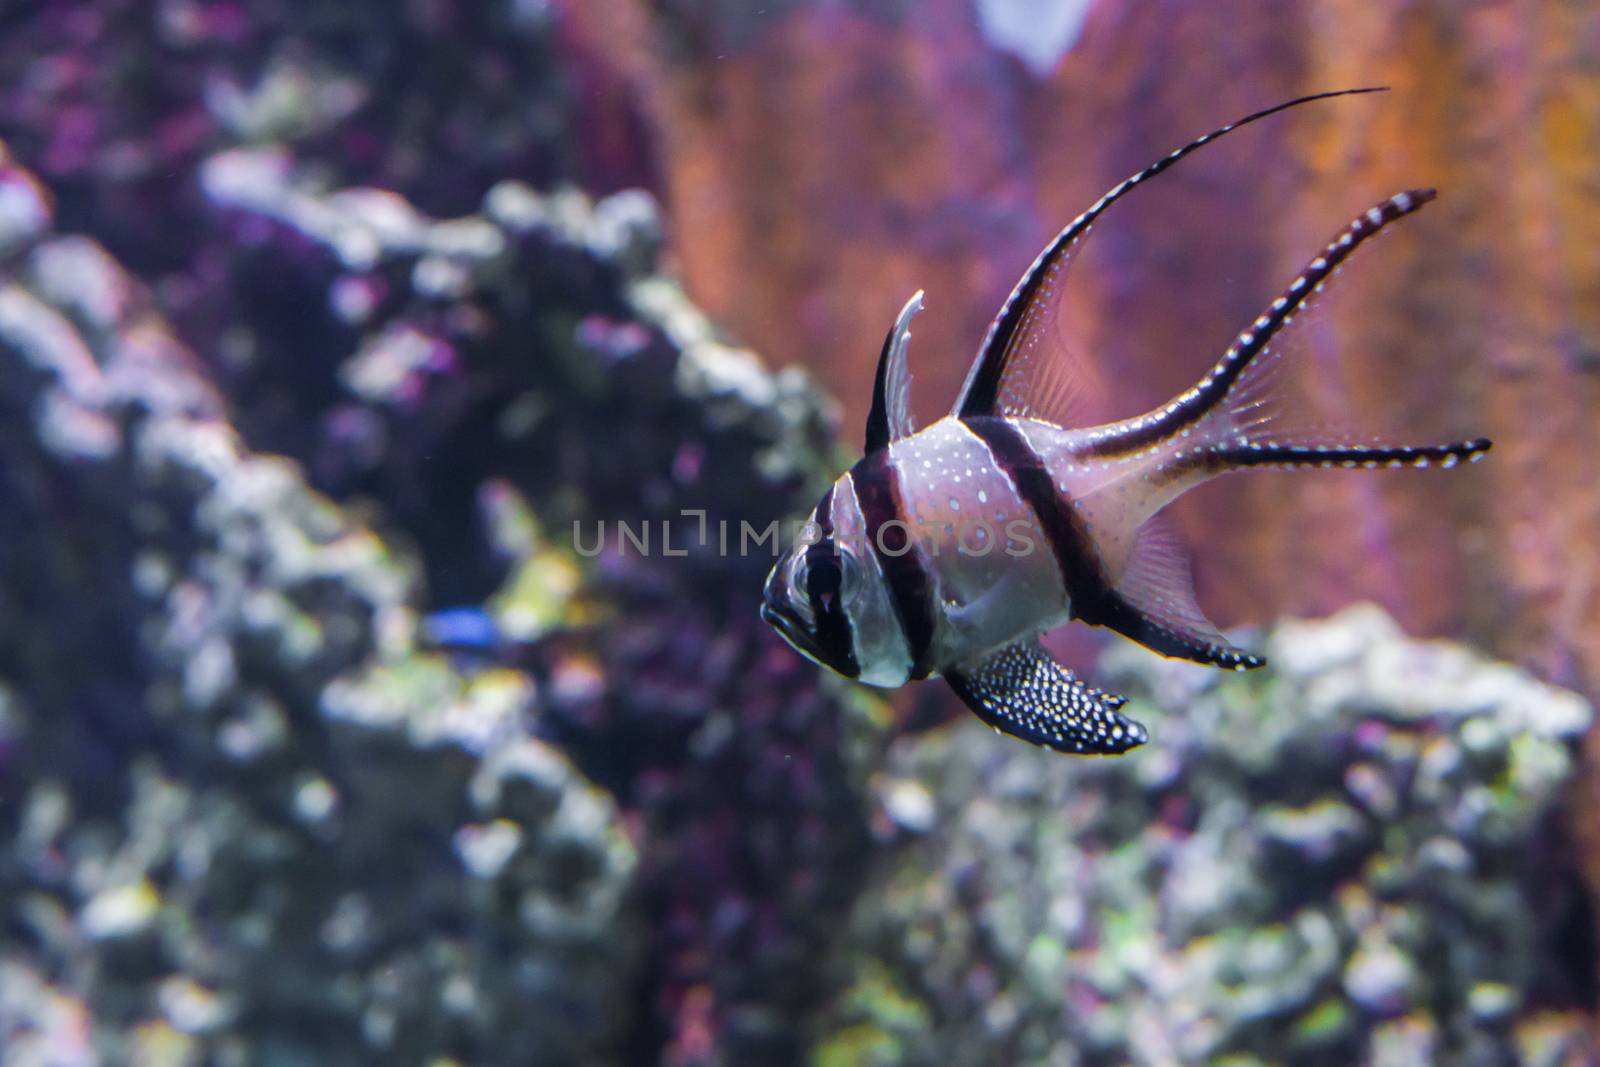 rare endangered banggai cardinalfish tropical fish from banggai island indonesia by charlottebleijenberg